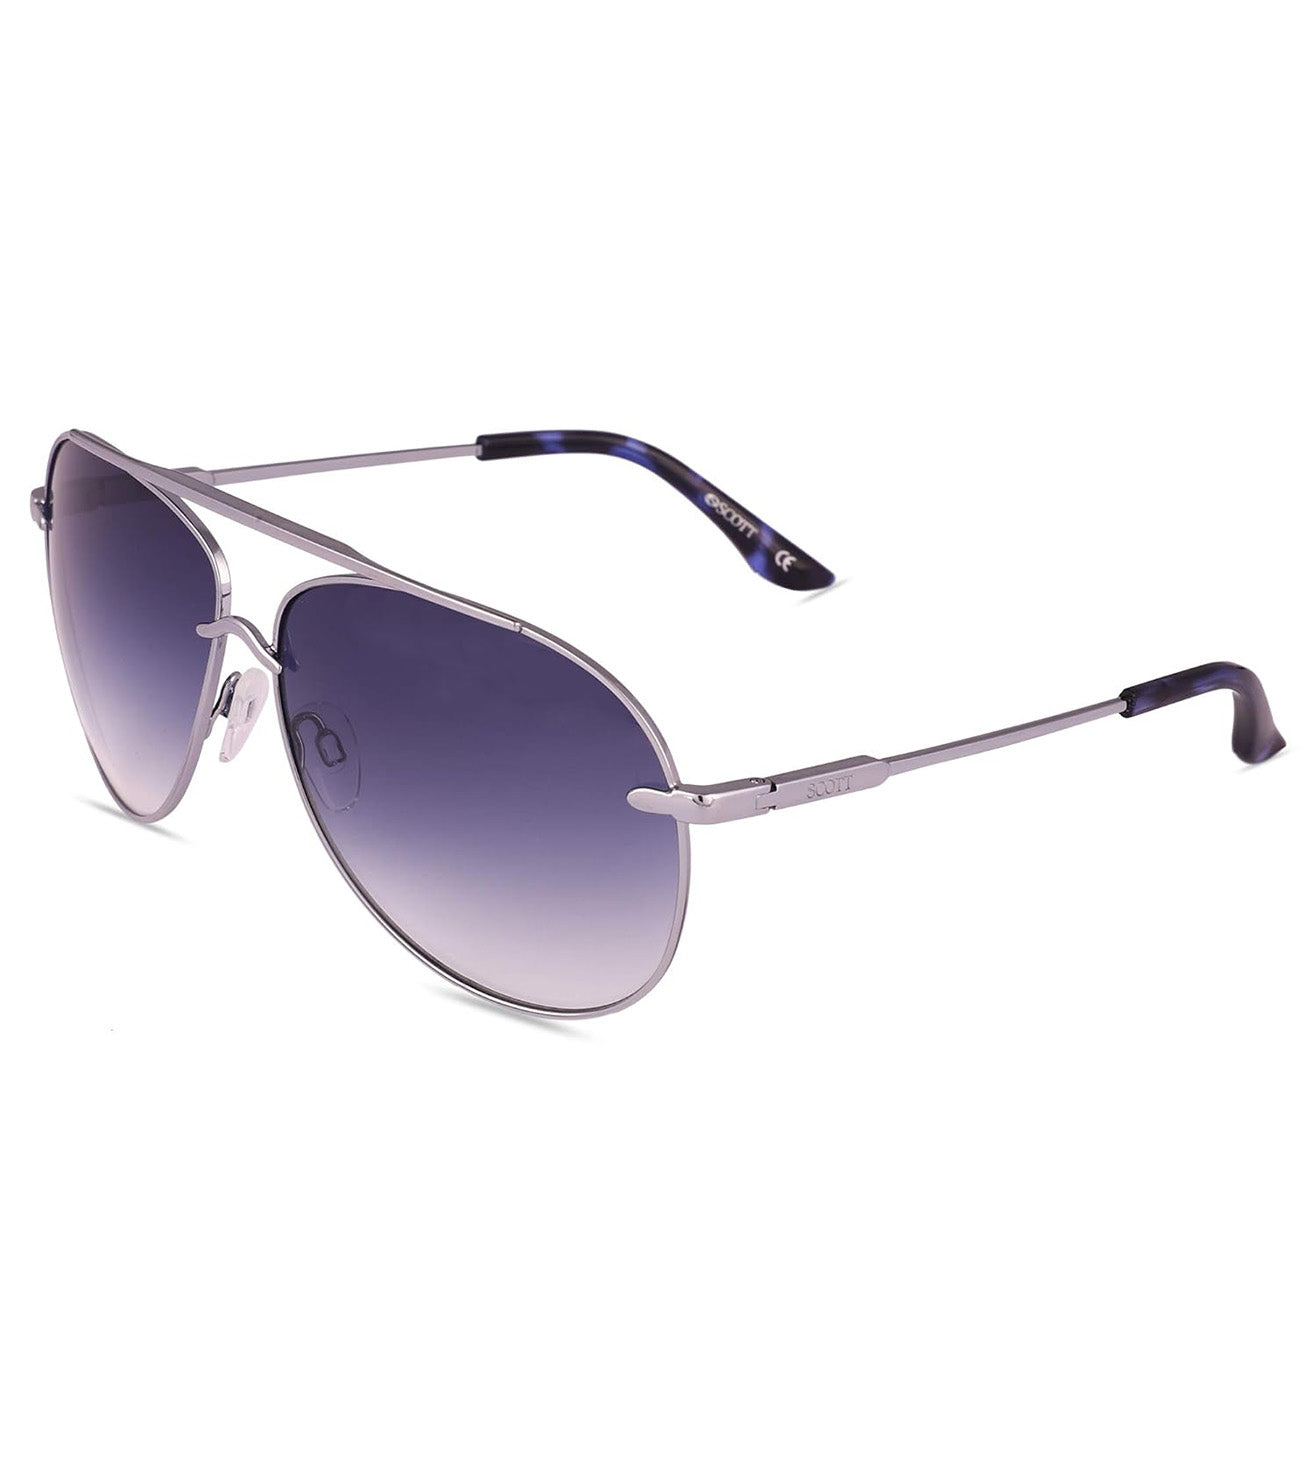 Scott Unisex Blue Aviator Sunglasses